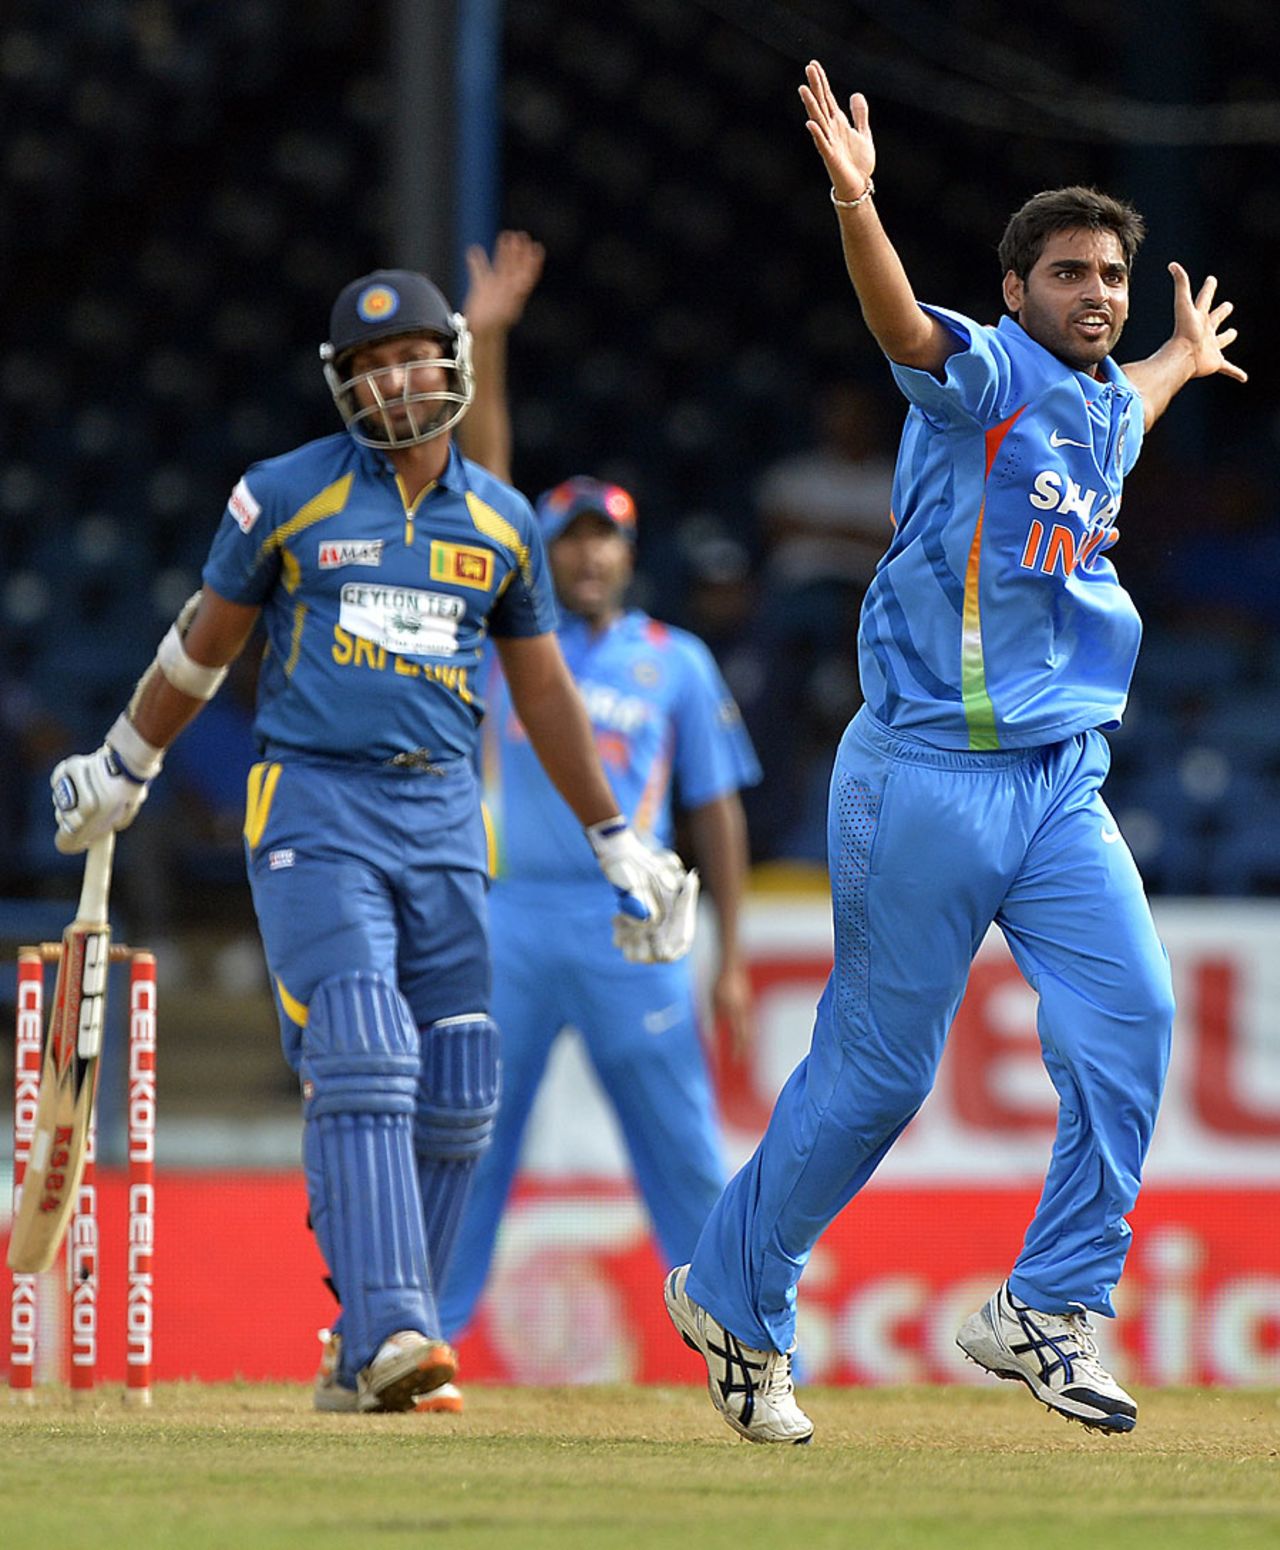 Bhuvneshwar Kumar wins an lbw appeal against Kumar Sangakkara, India v Sri Lanka, West Indies tri-series, Port-of-Spain, July 9, 2013